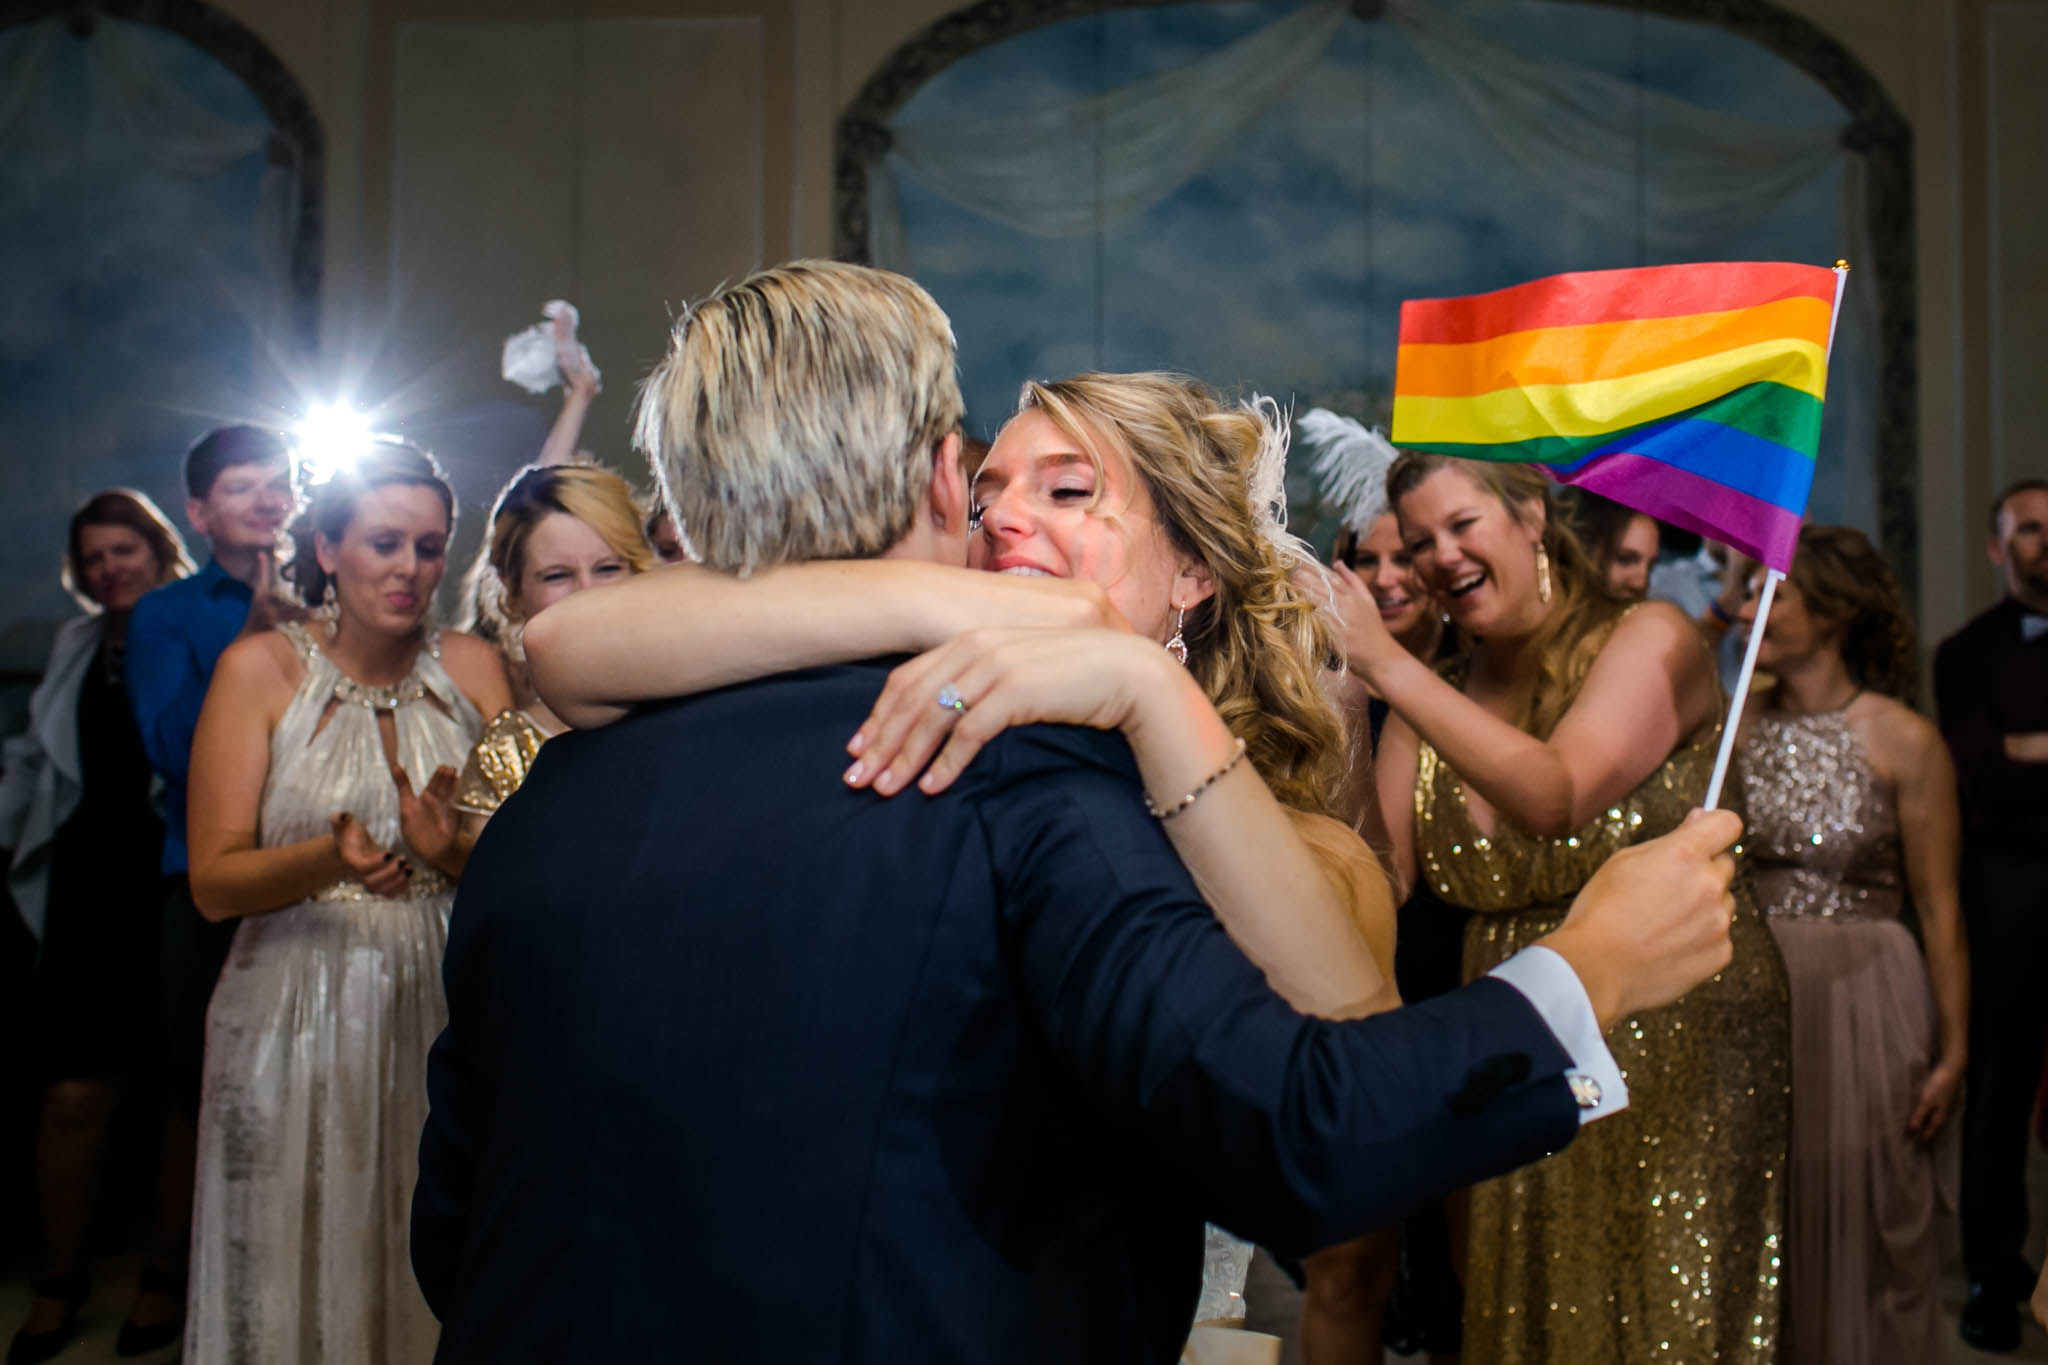 Chicago same-sex wedding